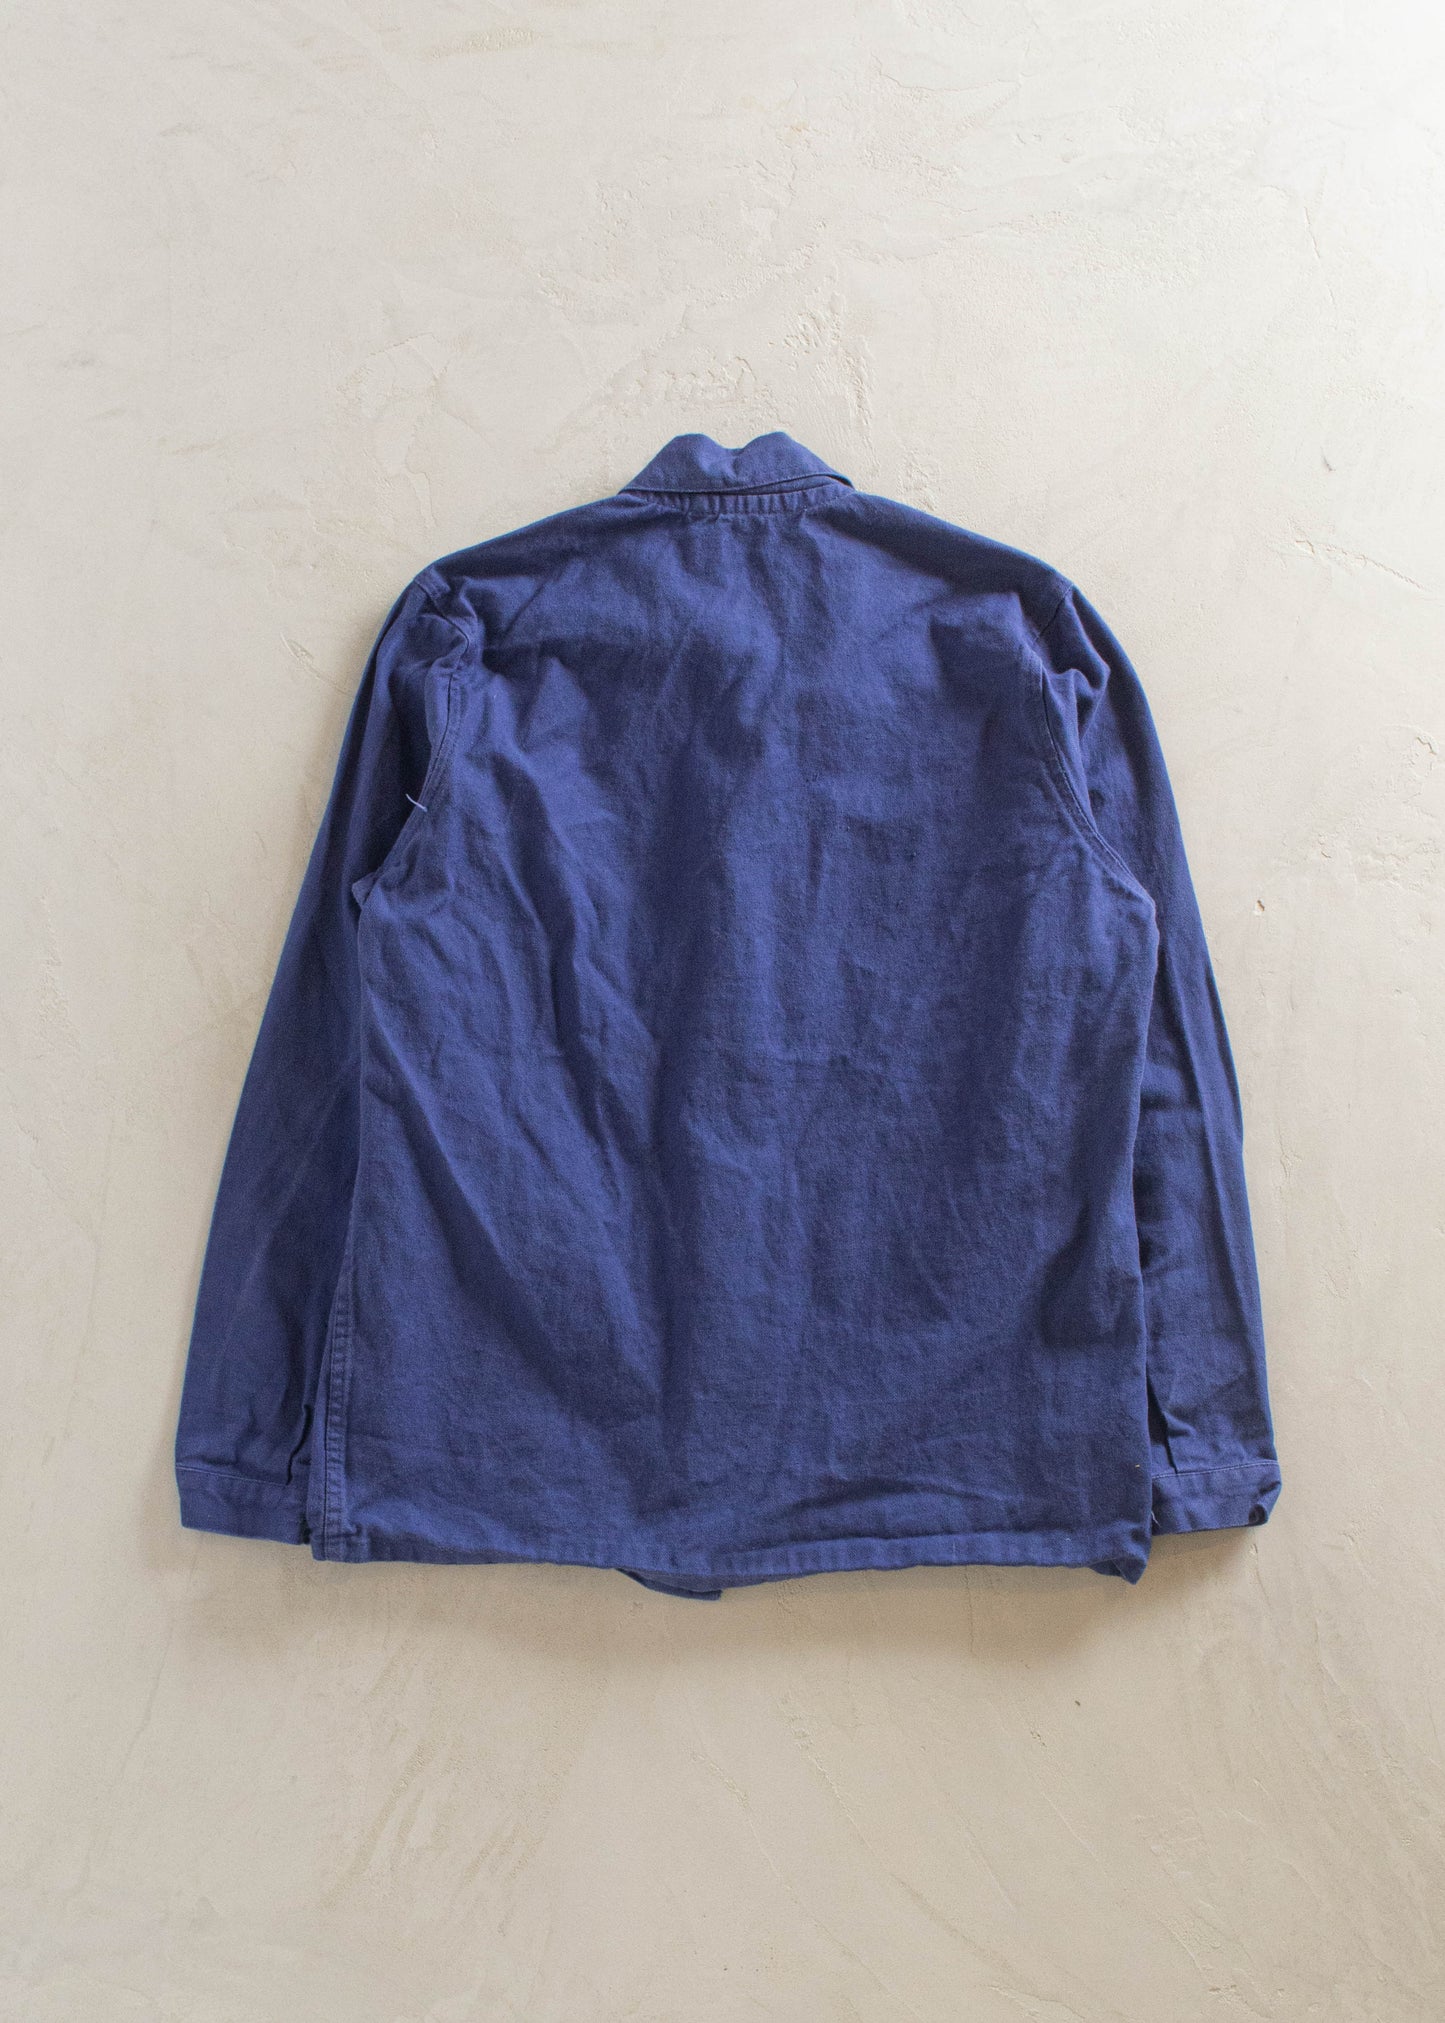 1980s Sanfor French Workwear Chore Jacket Size XS/S